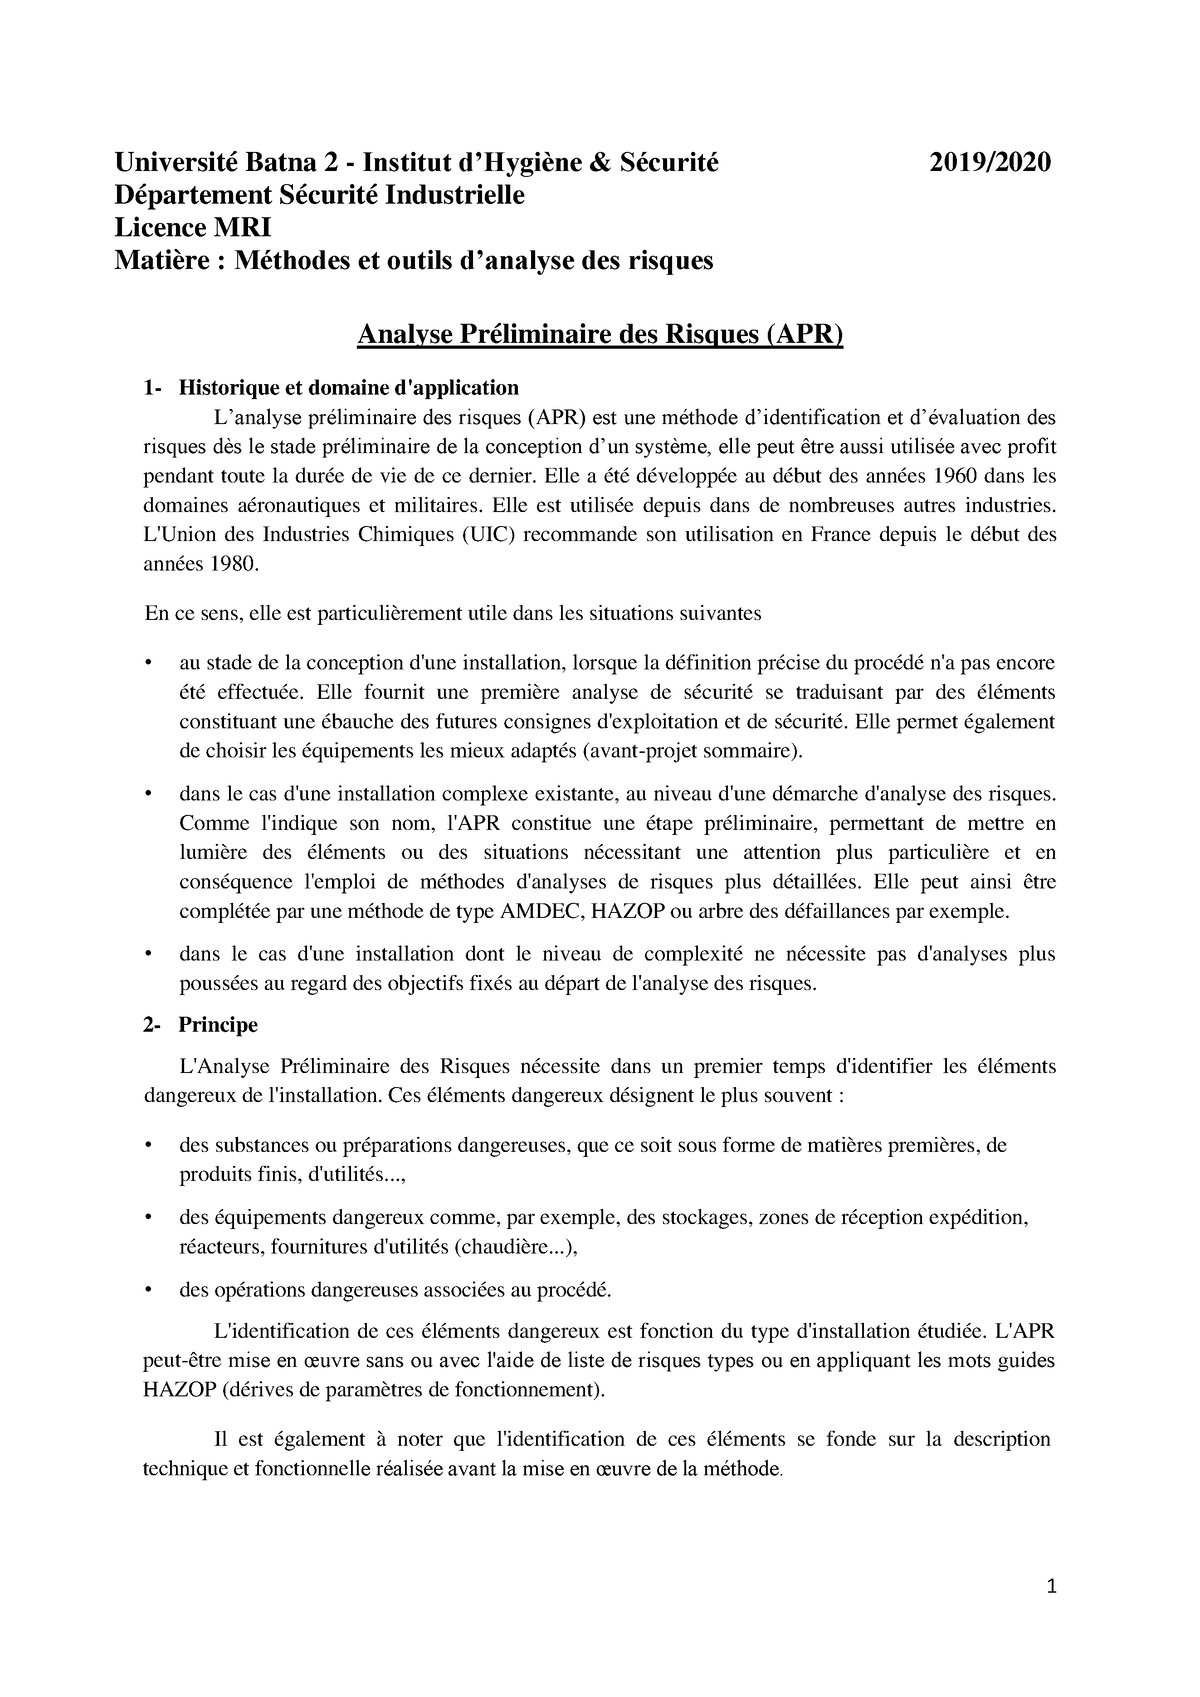 Chapitre 2-licence mri f611 - Université Batna 2 - Institut d’Hygiène ...